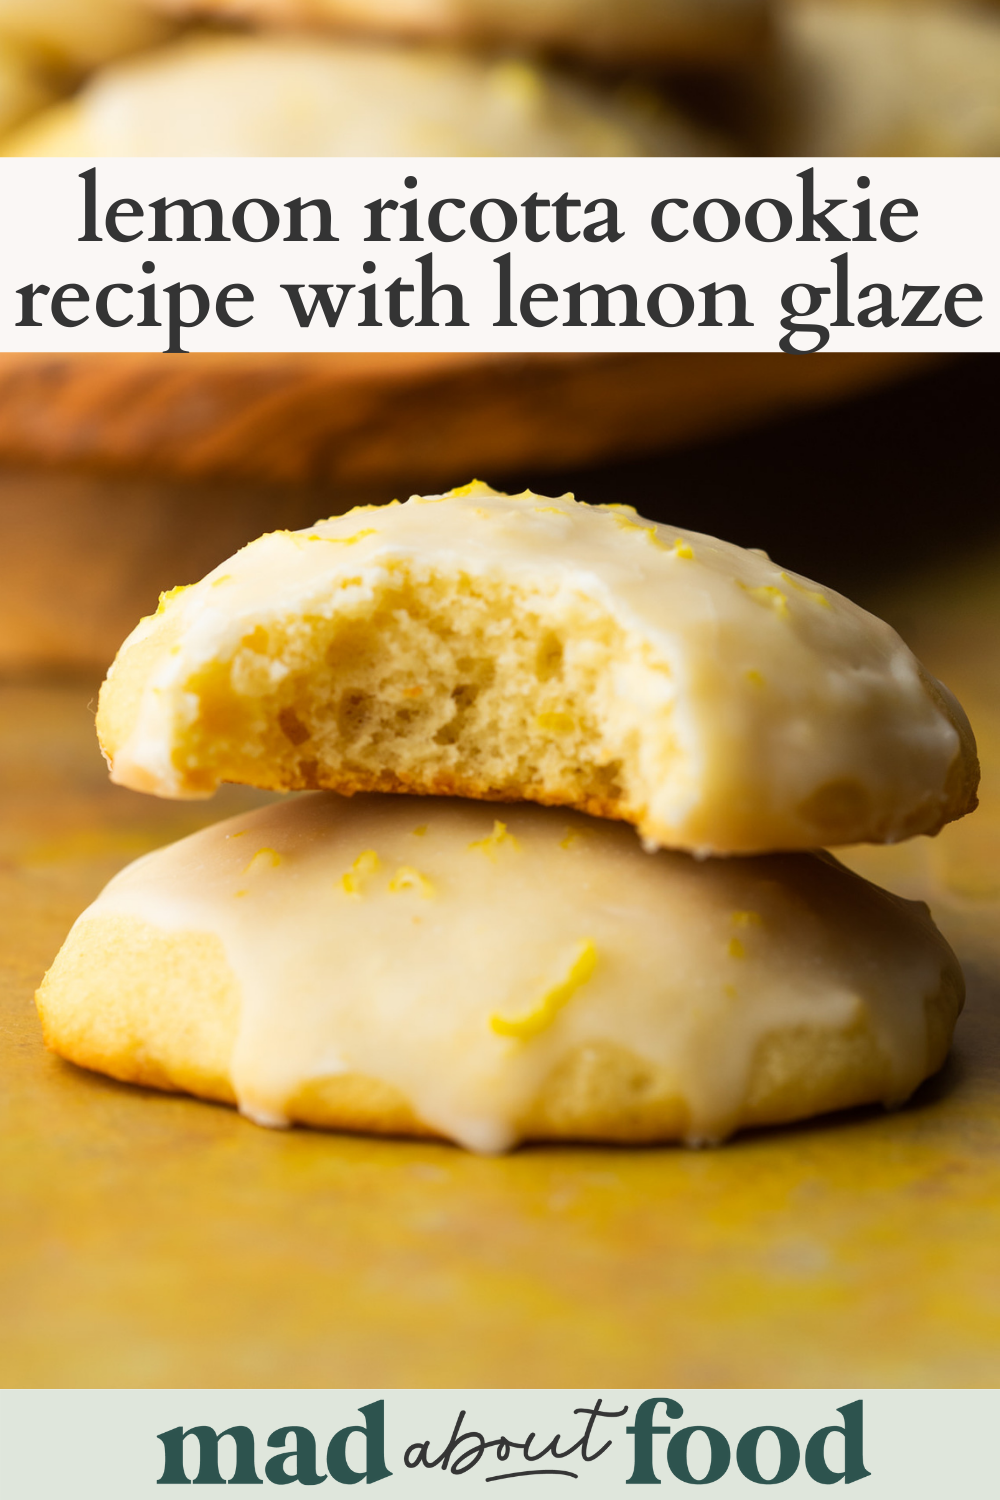 Image for pinning lemon ricotta cookie recipe with lemon glaze on pinterest